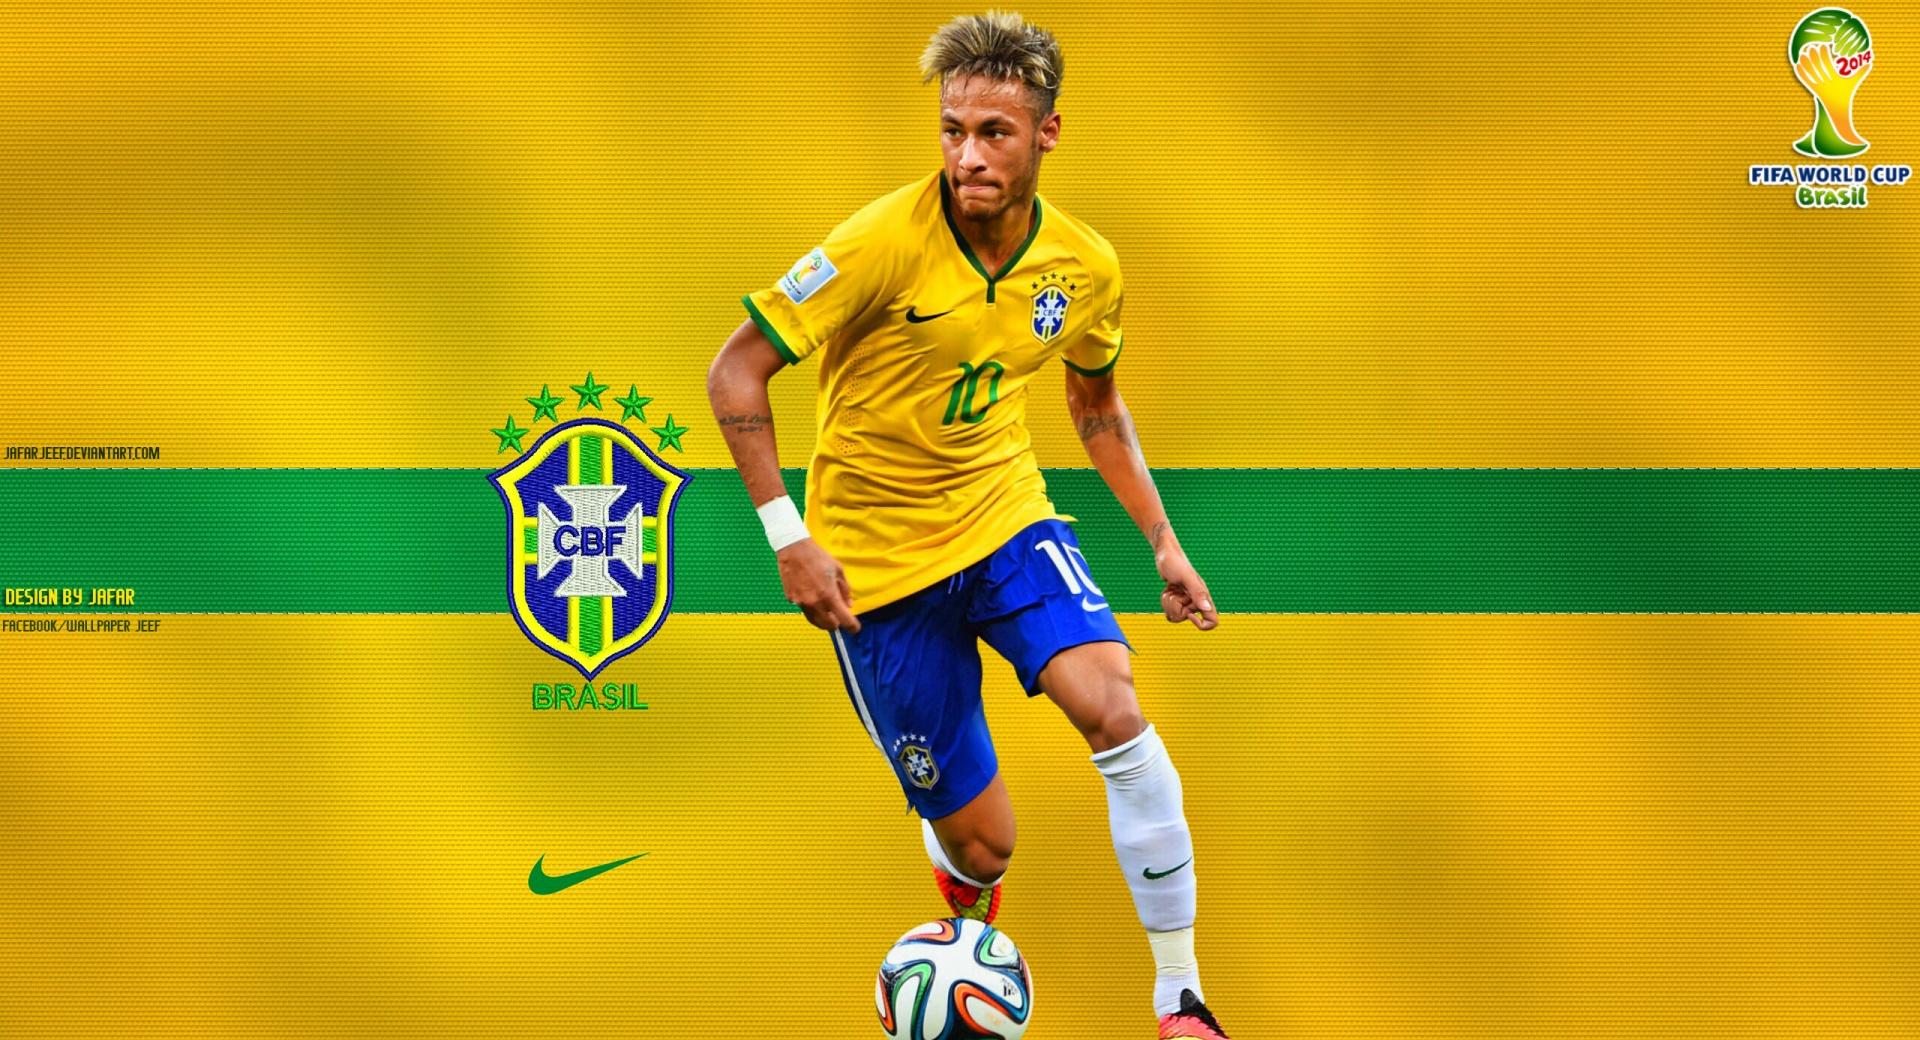 NEYMAR BRAZIL WORLD CUP 2014 wallpapers HD quality